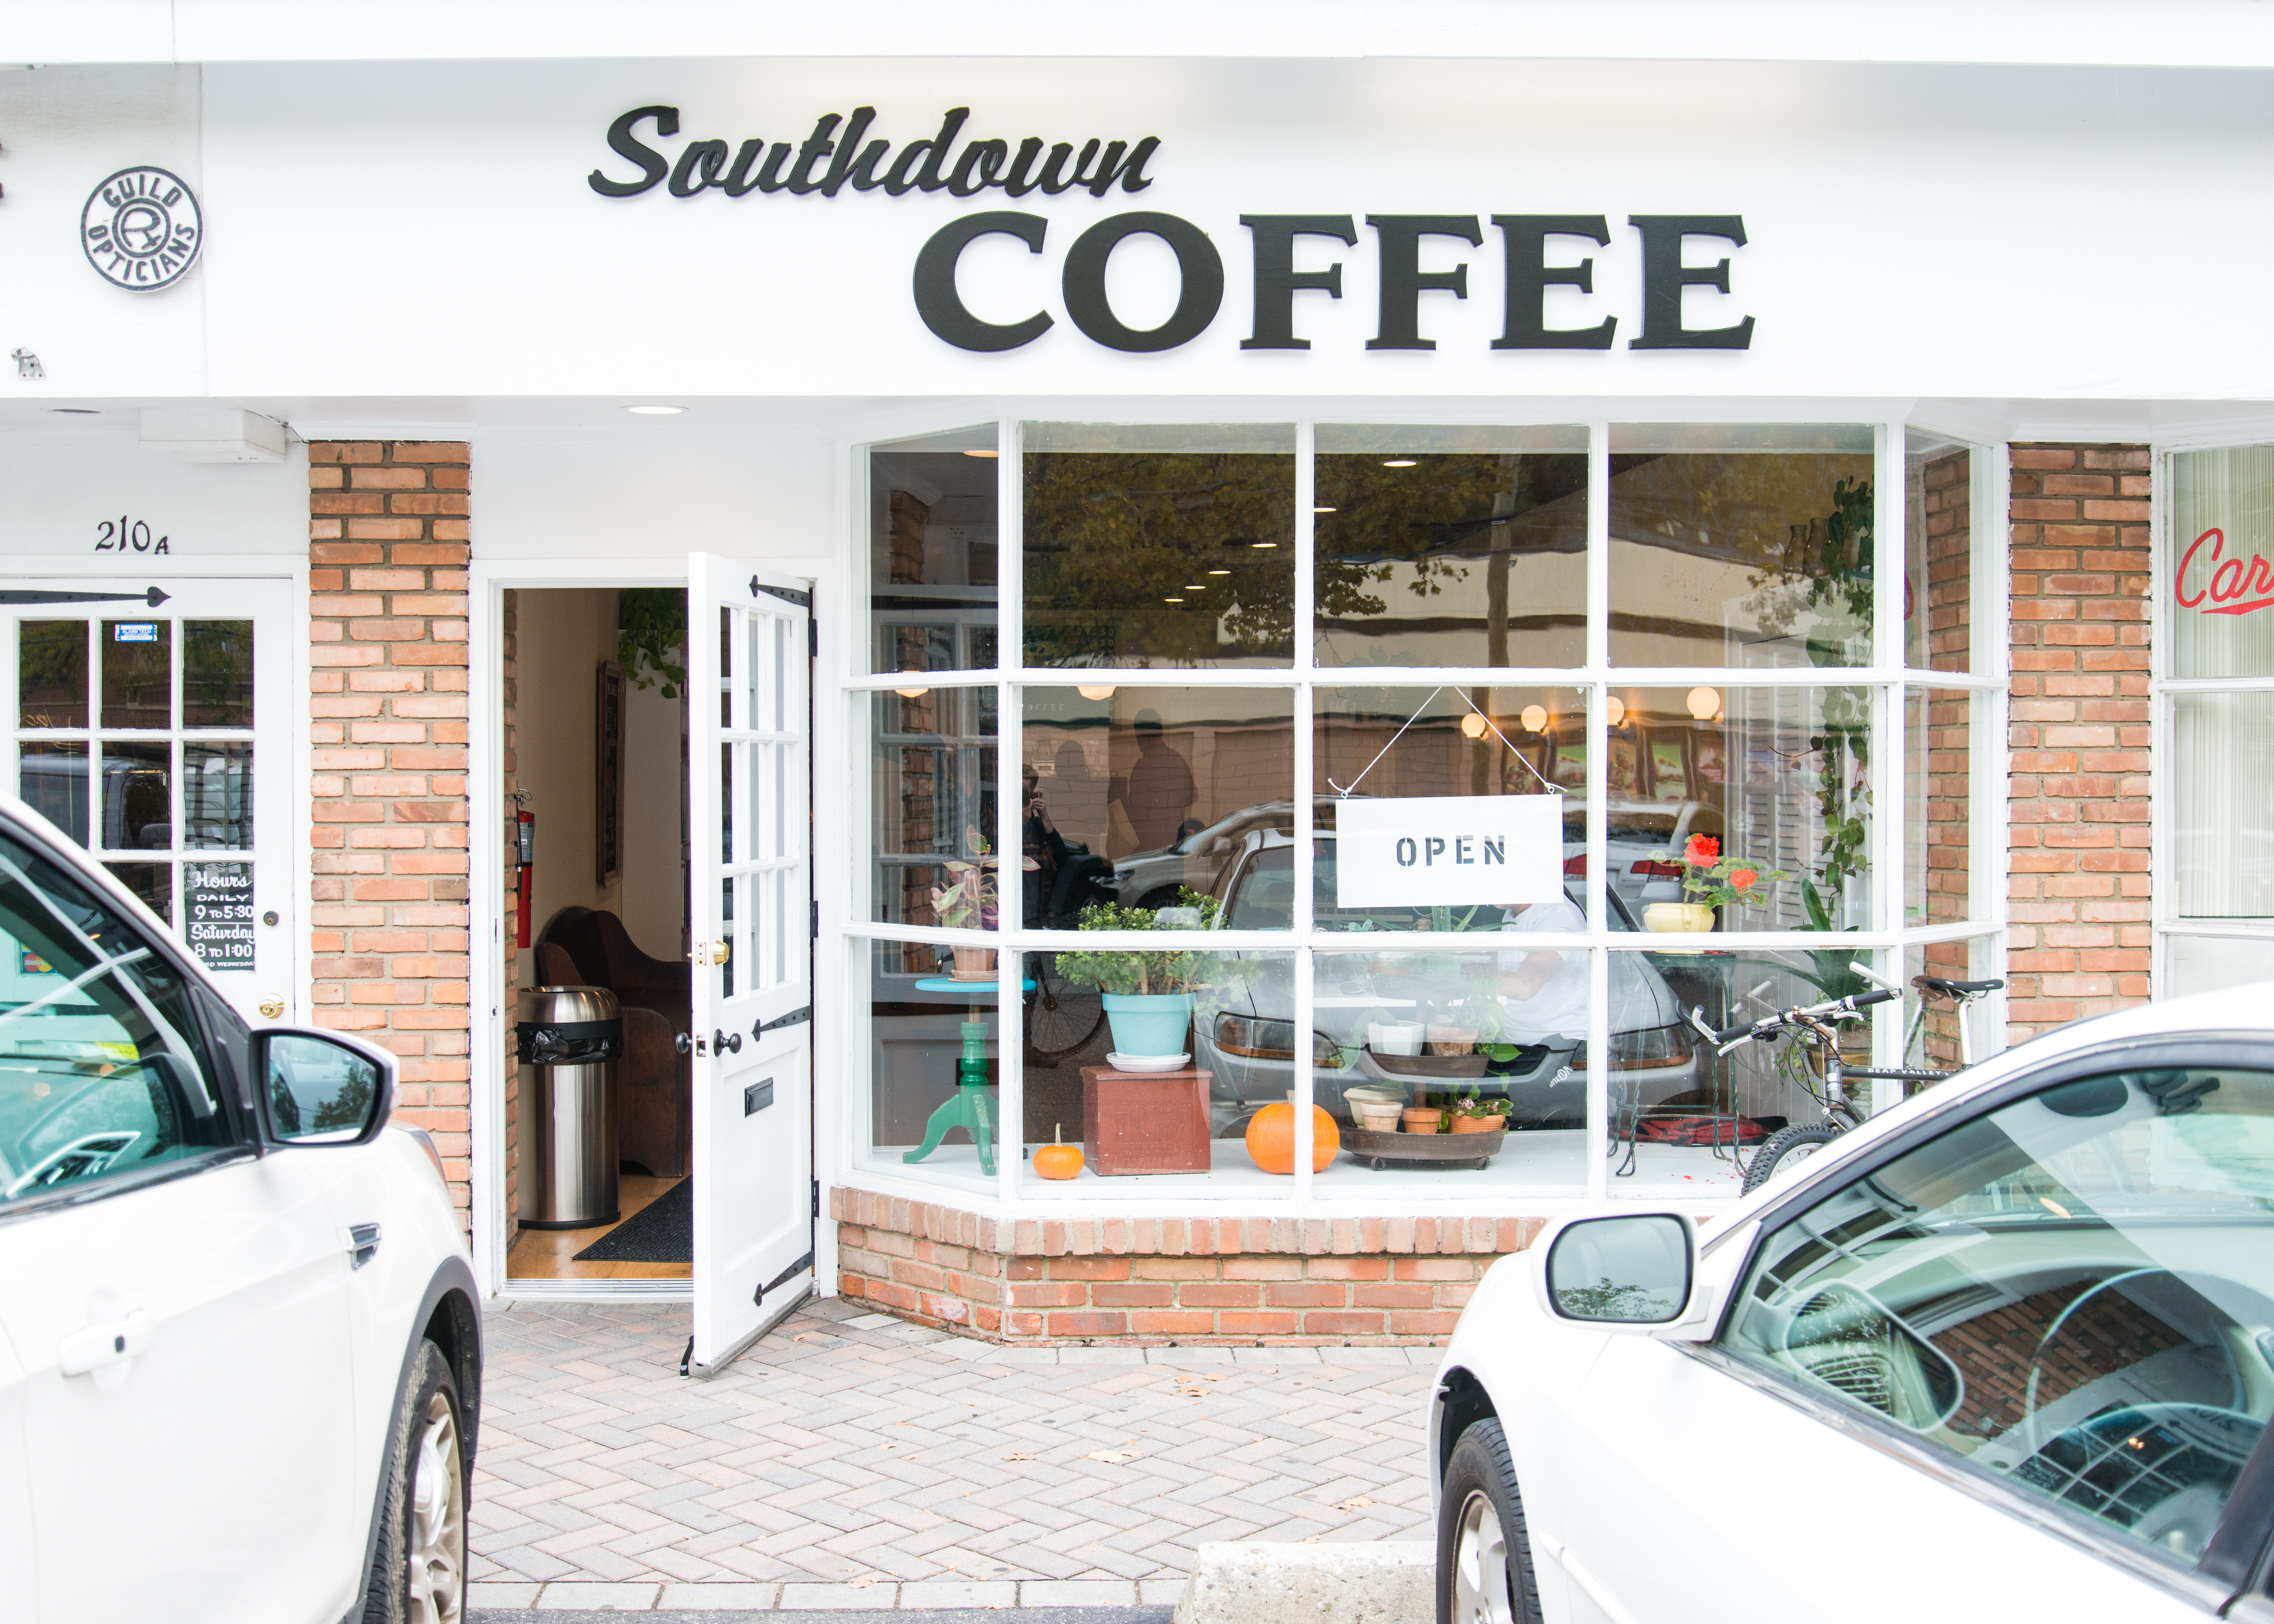 Southdown Coffee Long Island Sprudge